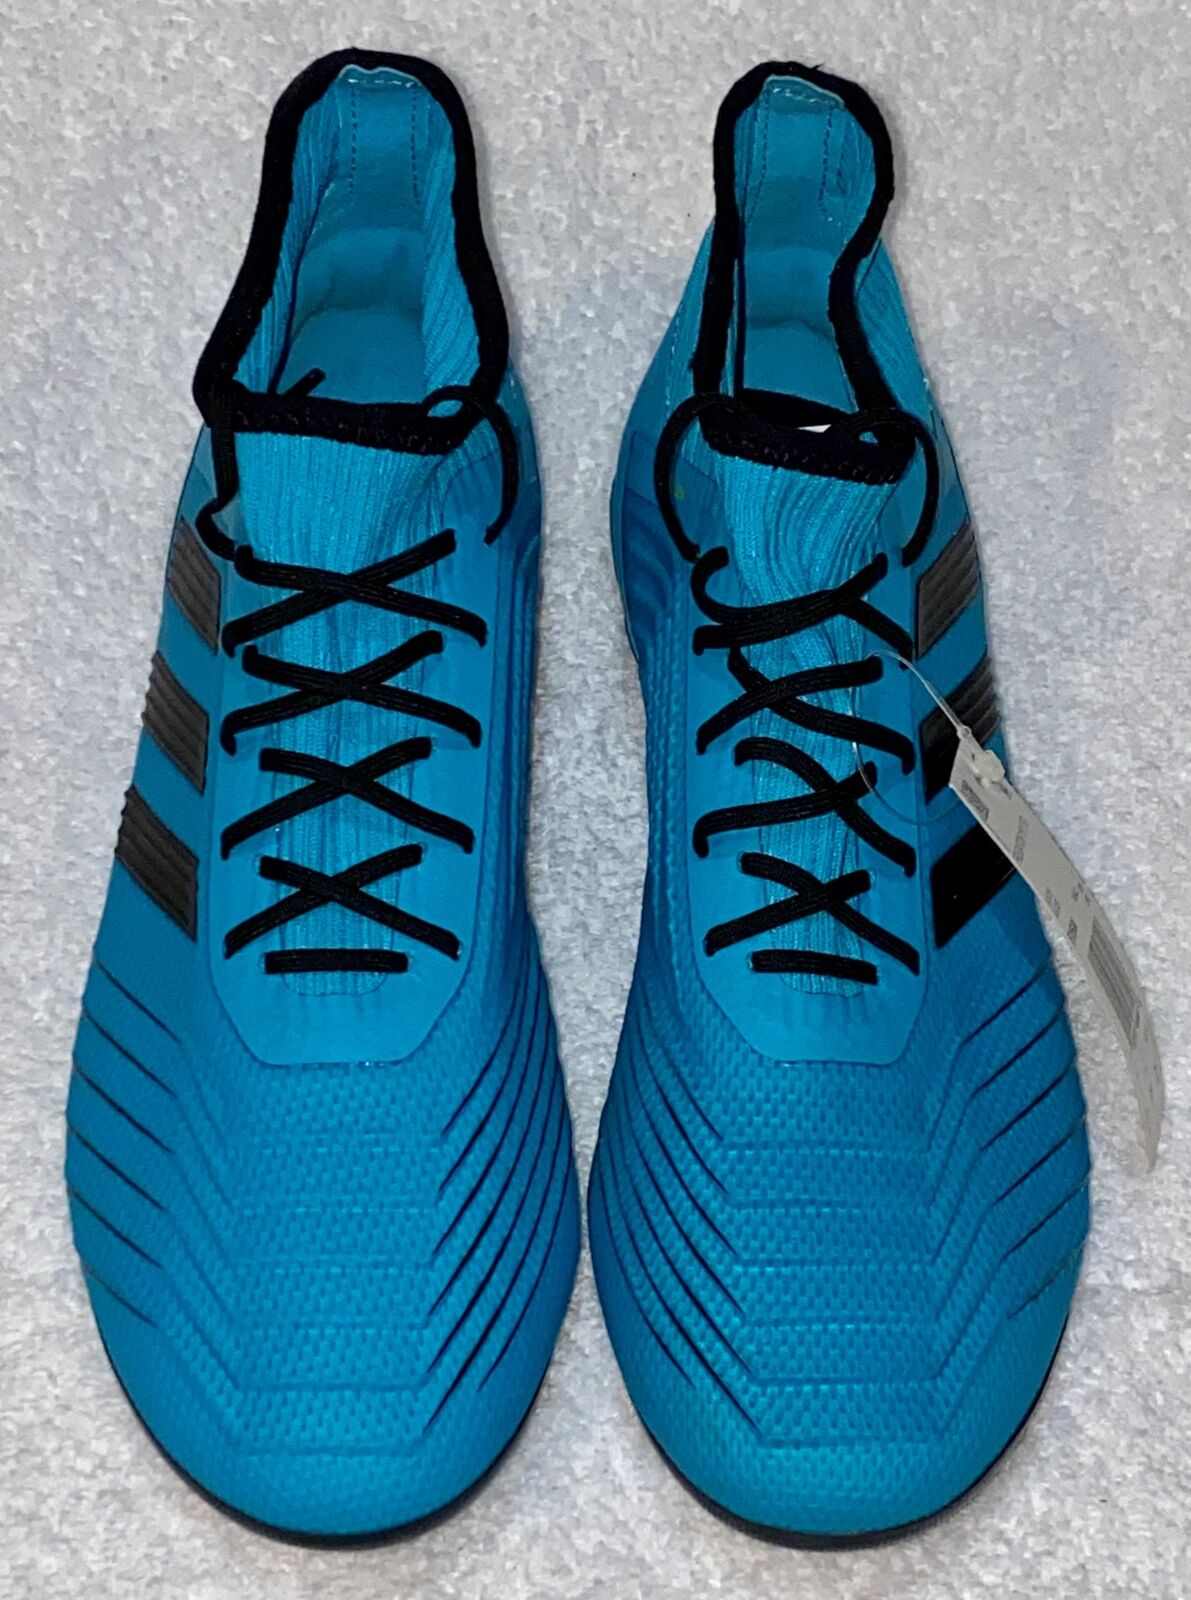 ADIDAS Predator 19.2 FG Soccer Cleats Boots Bright Cyan Blue Black Mens 8  10.5